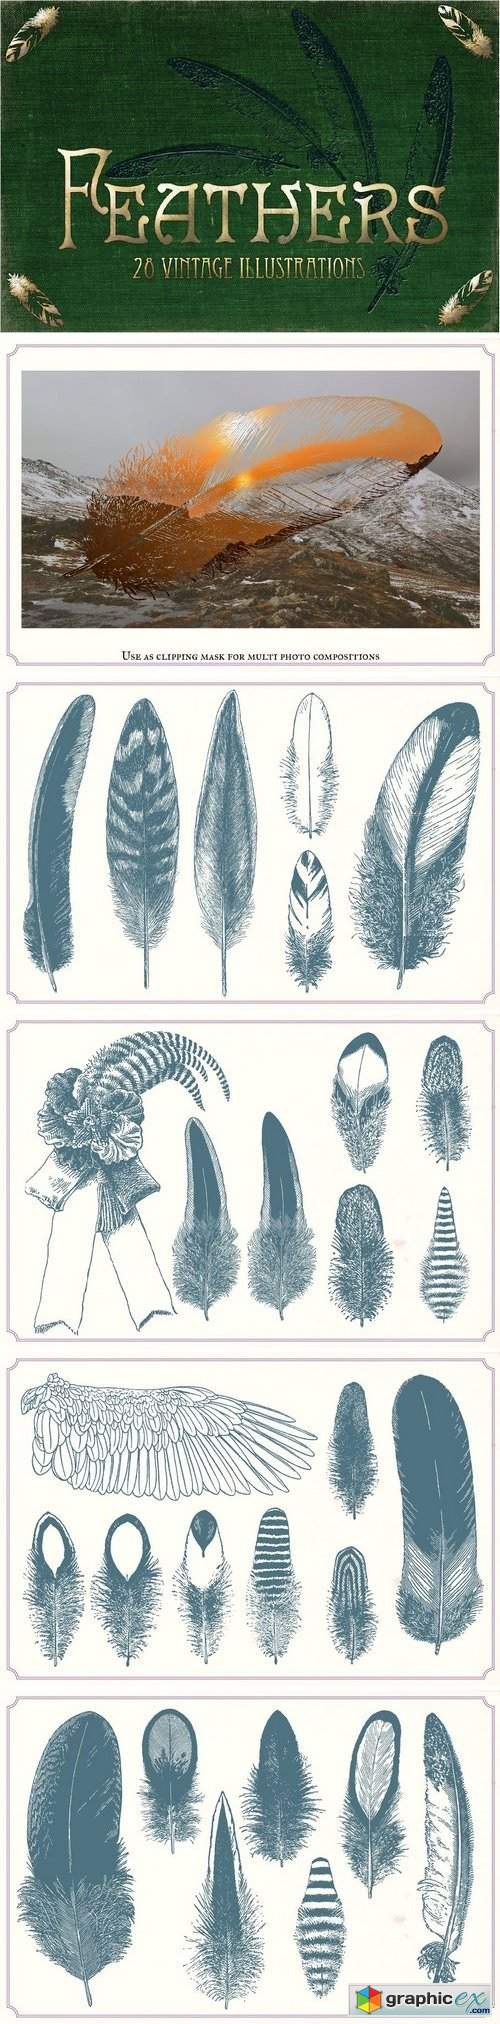 Vintage Feathers